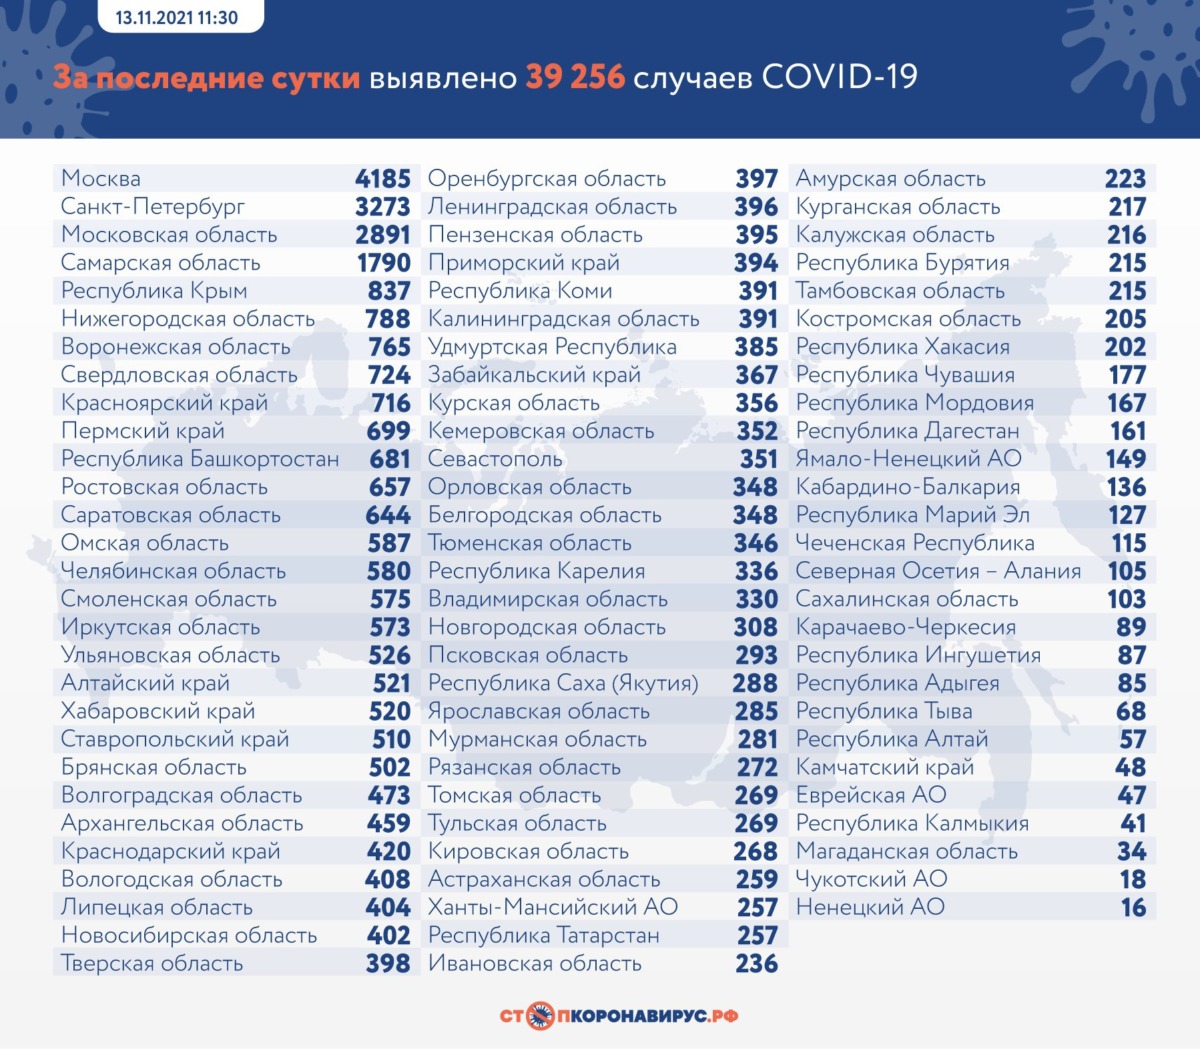 Оперативная статистика по коронавирусу в России на 13 ноября